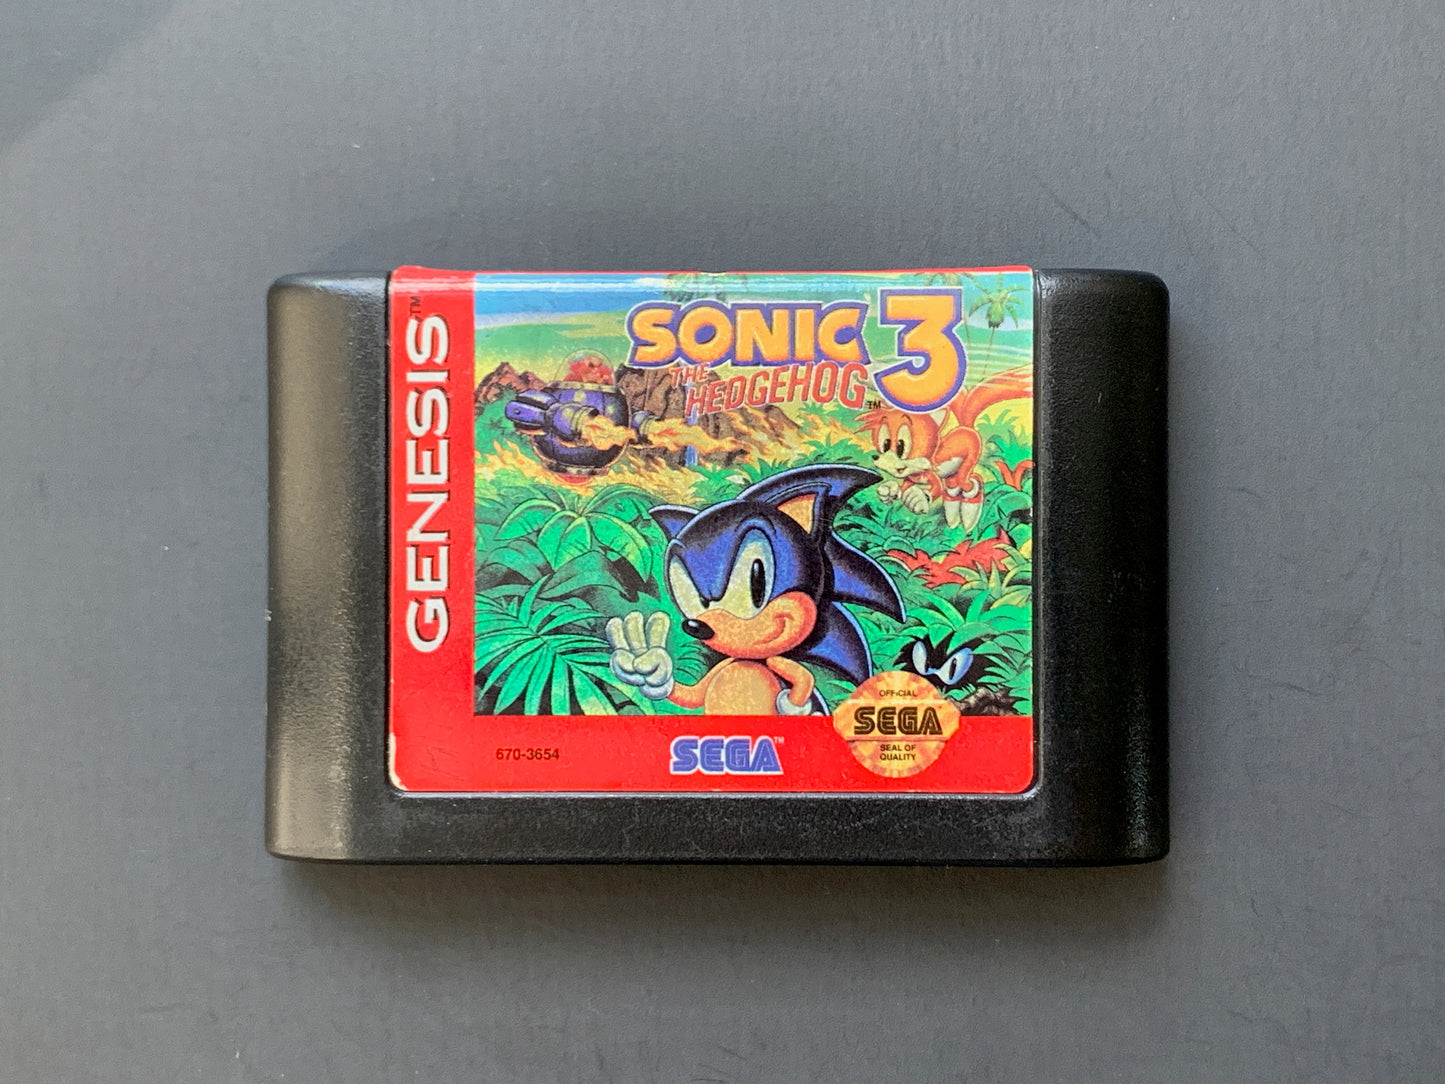 Sonic the Hedgehog 3 • Sega Genesis